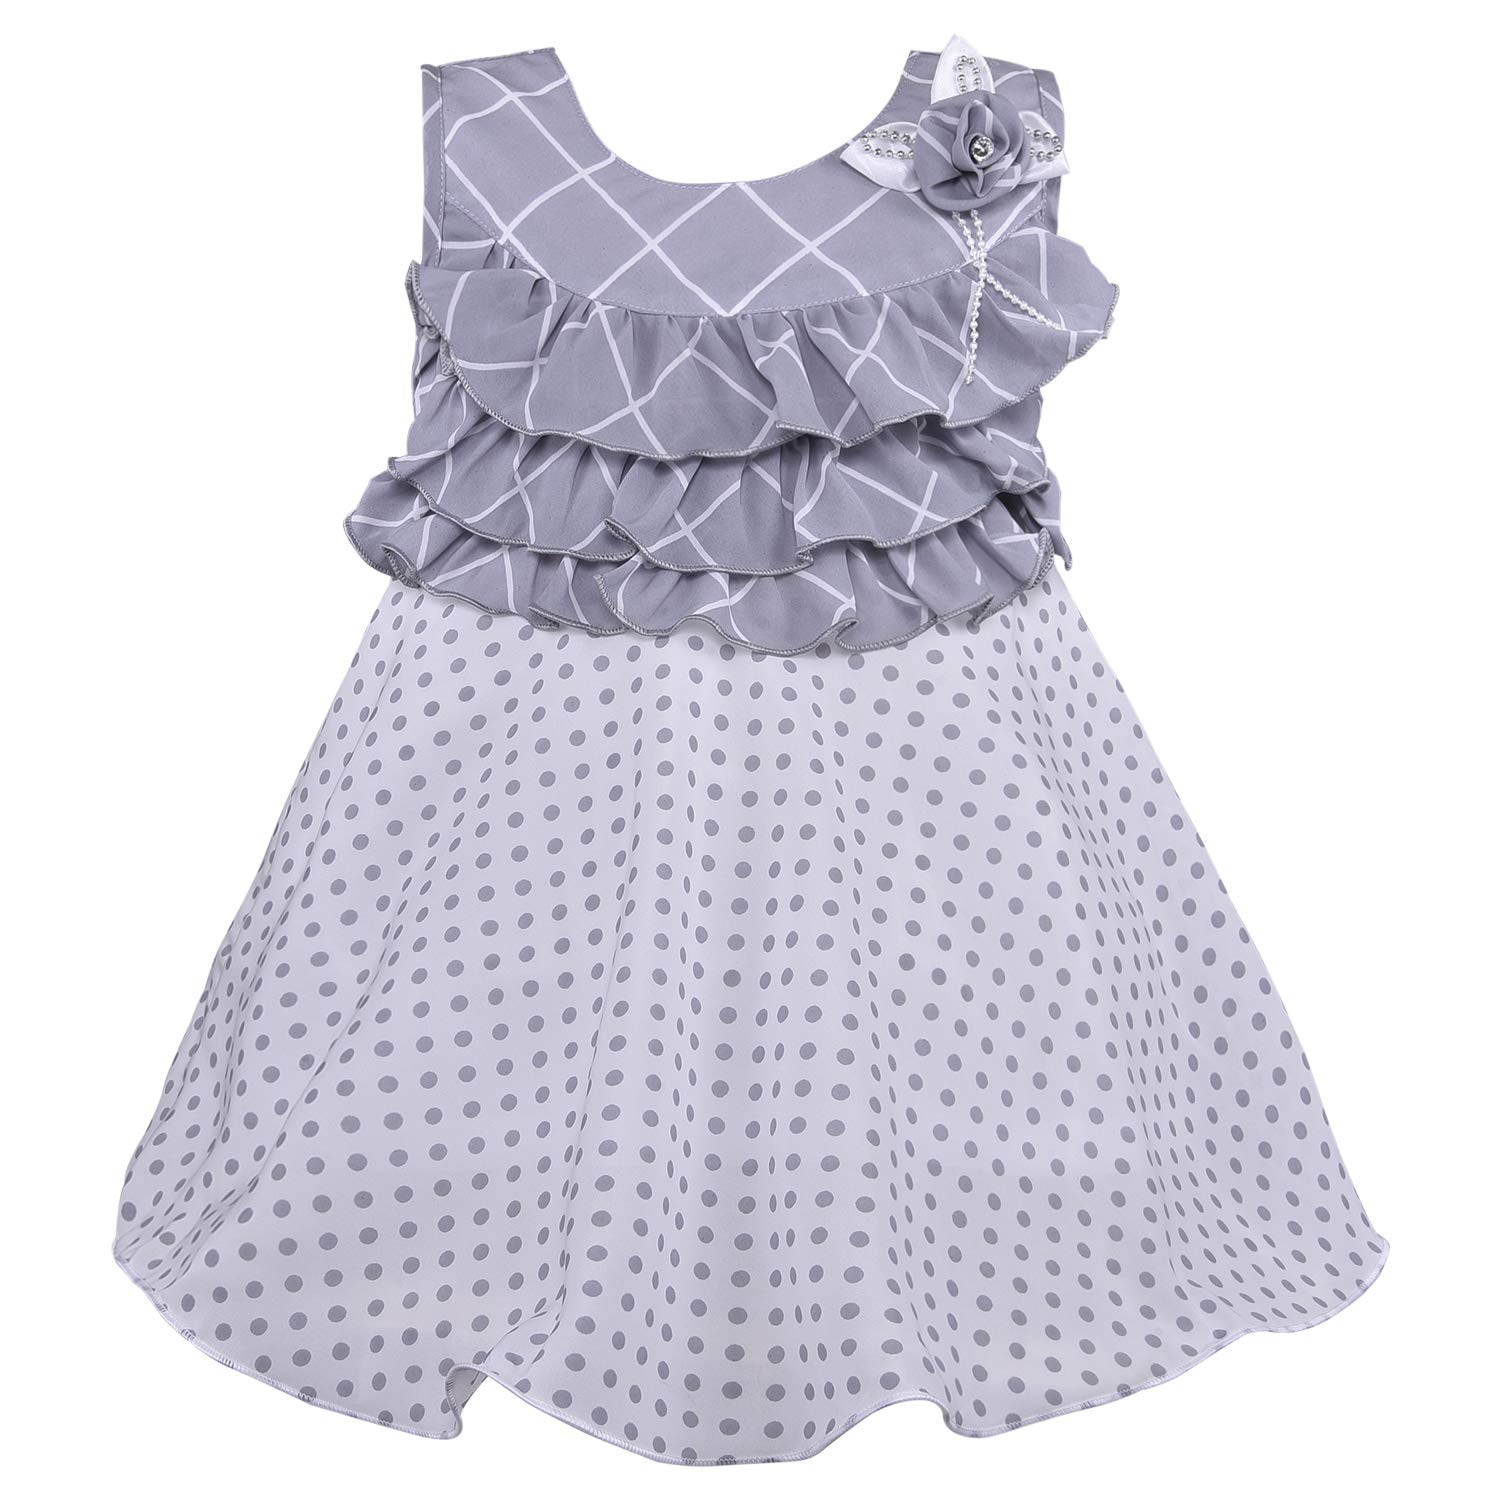 Baby Girls Dress Frock-fe2813gry - Wish Karo Party Wear - frocks Party Wear - baby dress